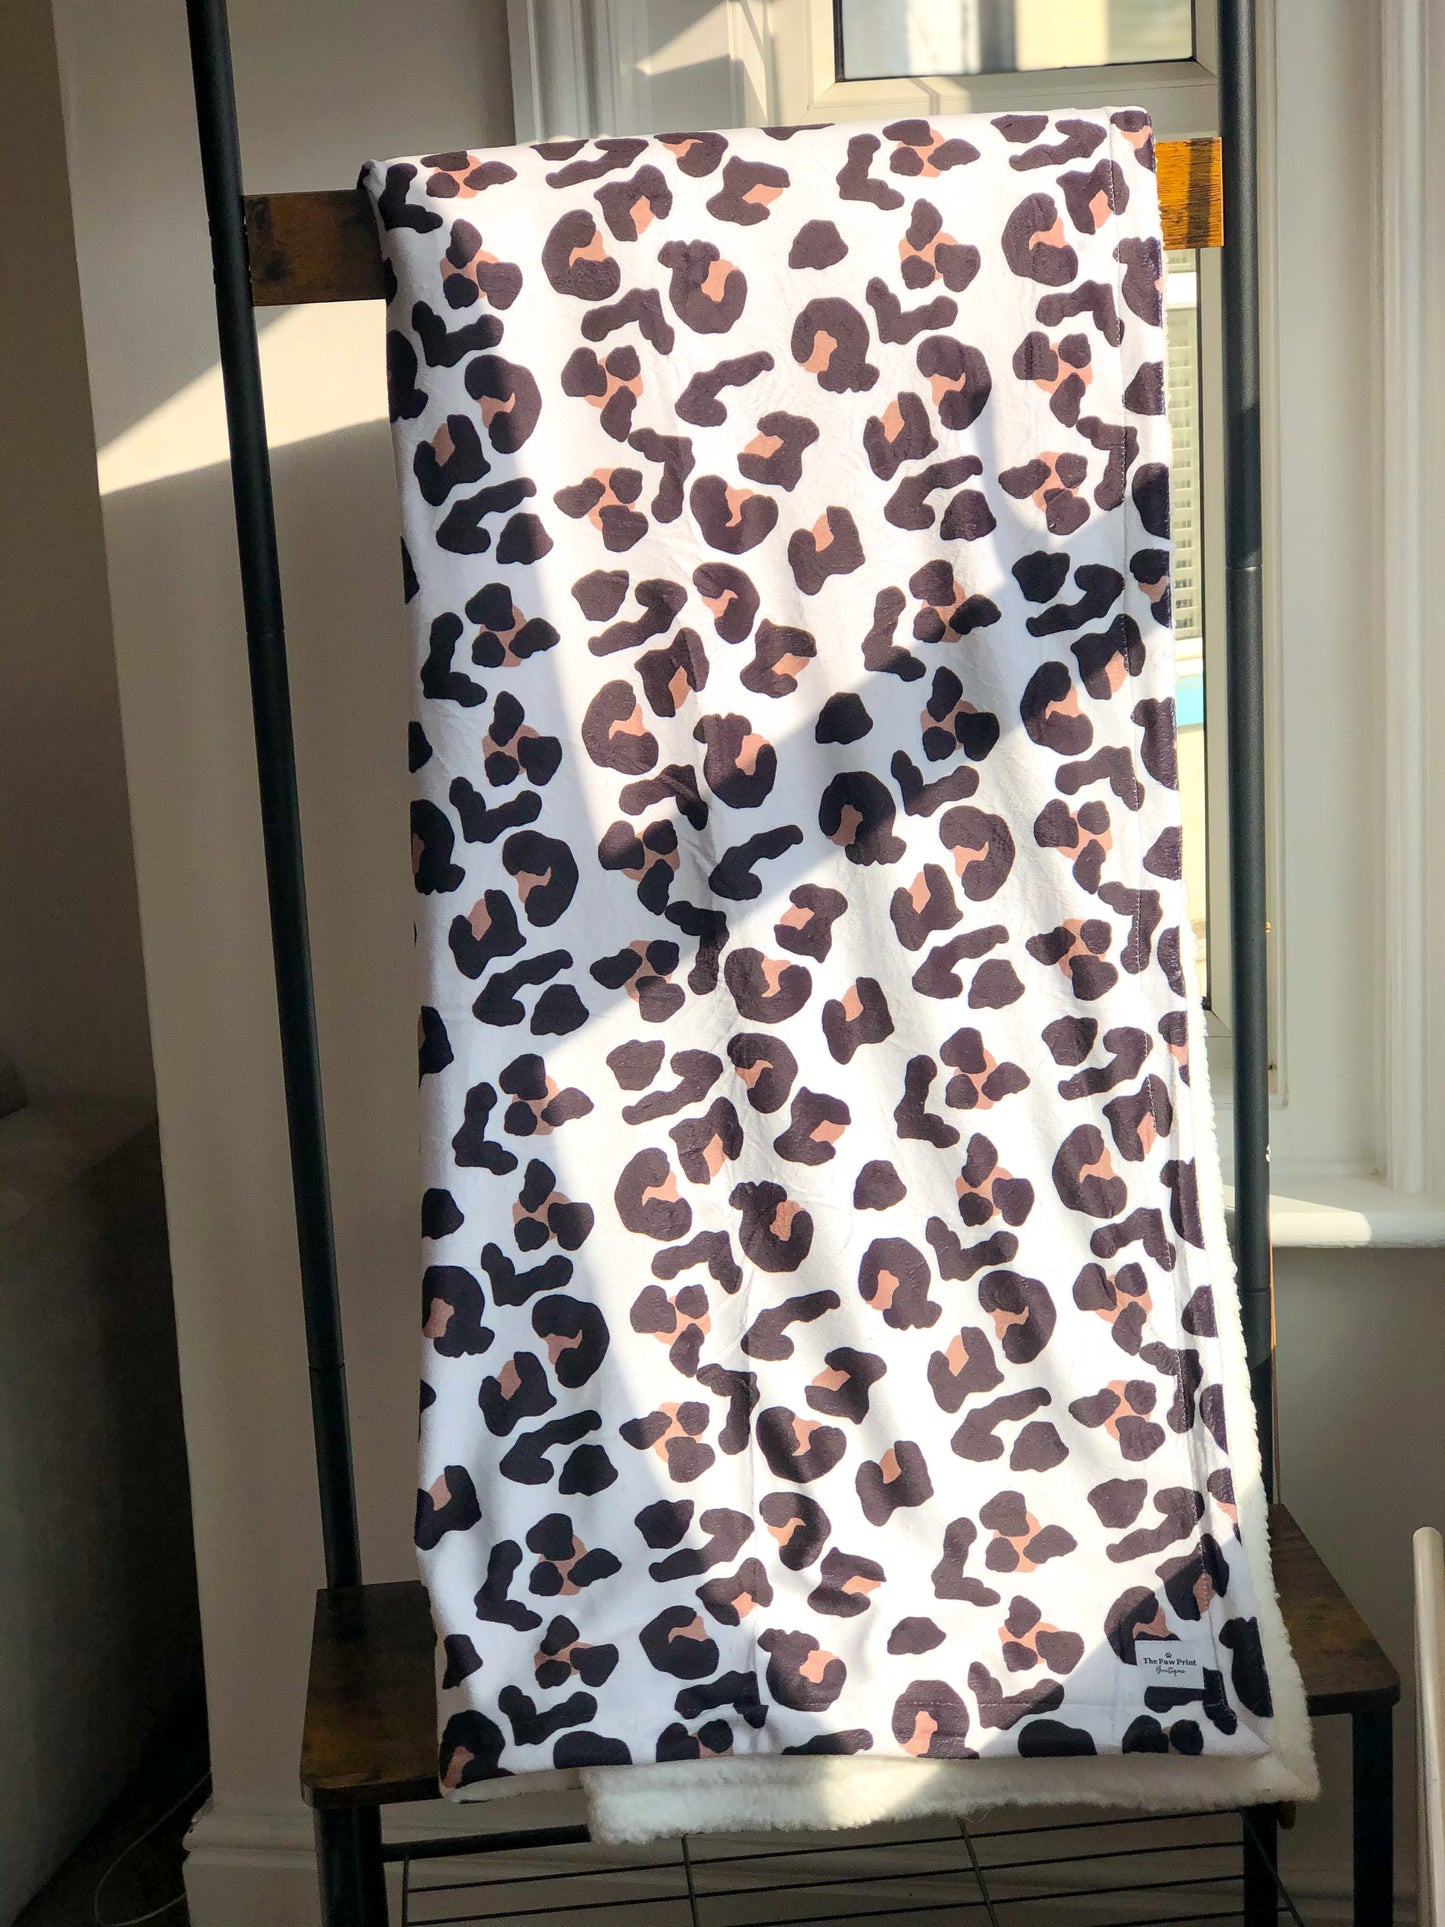 The Lavish Leopard Human Blanket